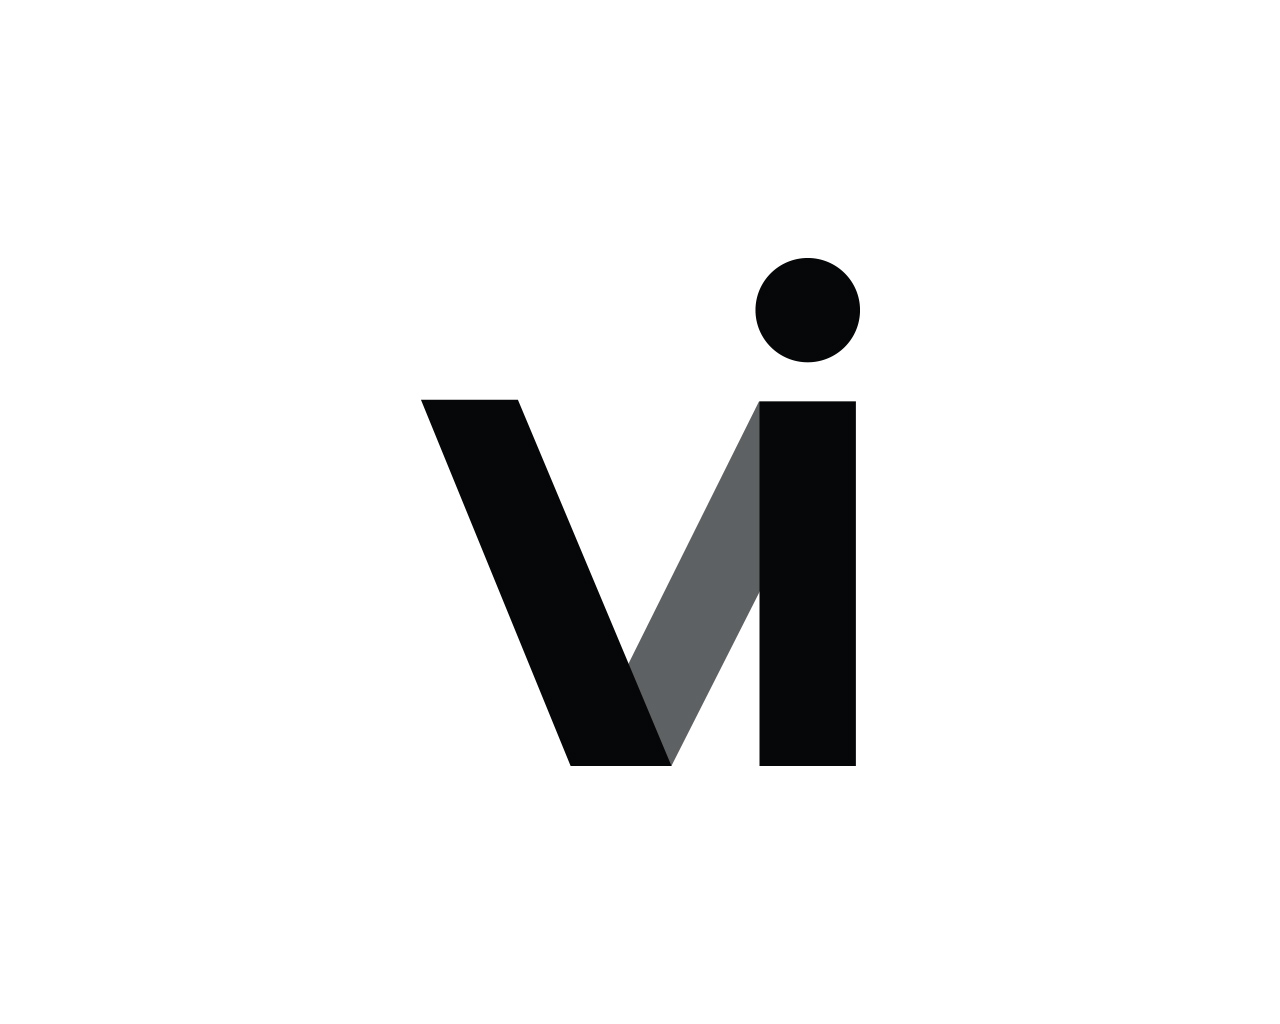 1 play site. Логотип i. Картинка с буквами vi. Vi+1 логотипа. Логотип с буквой i.